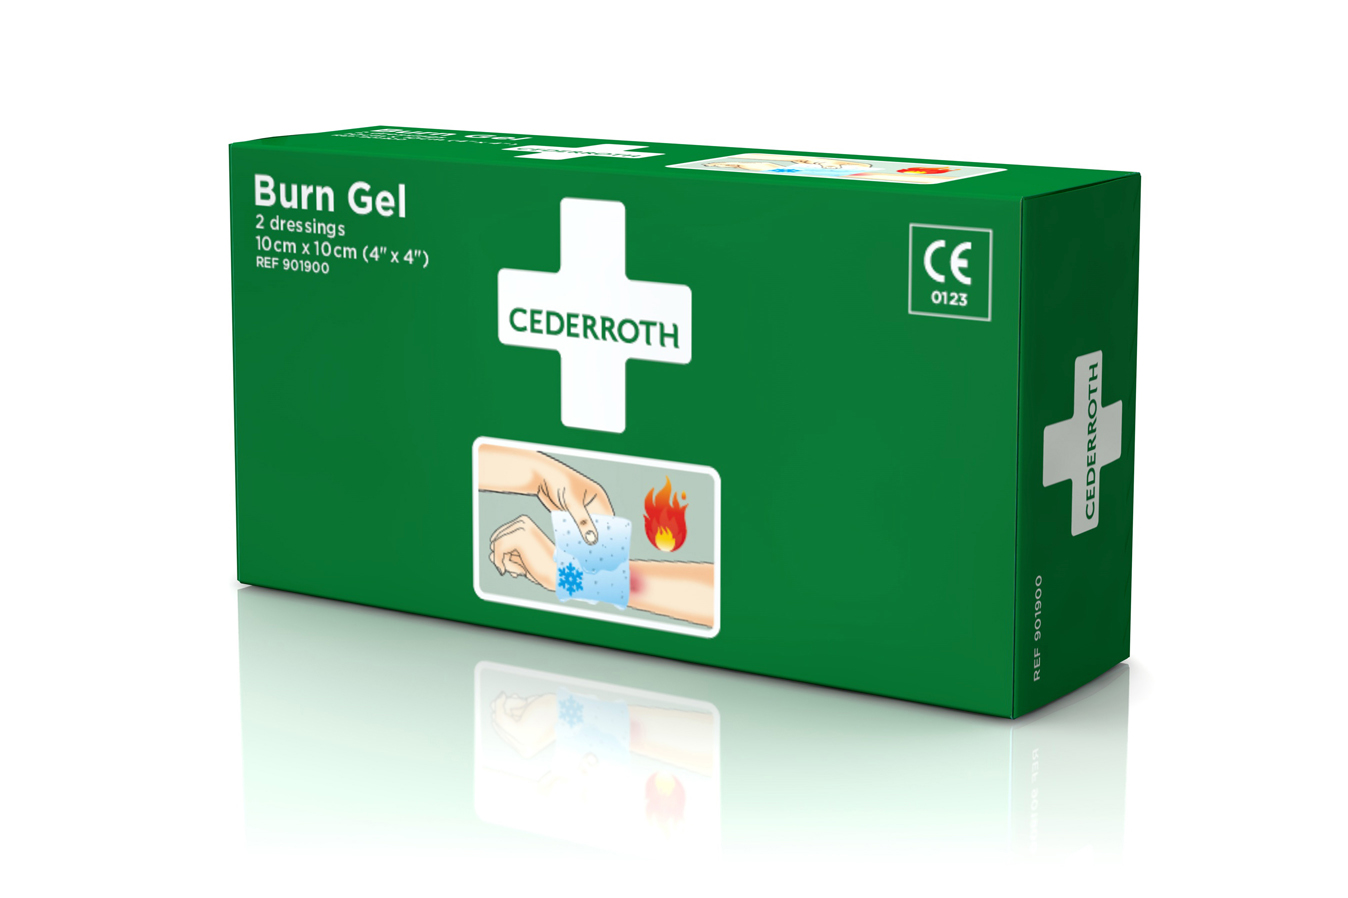 Cederroth Burn Gel